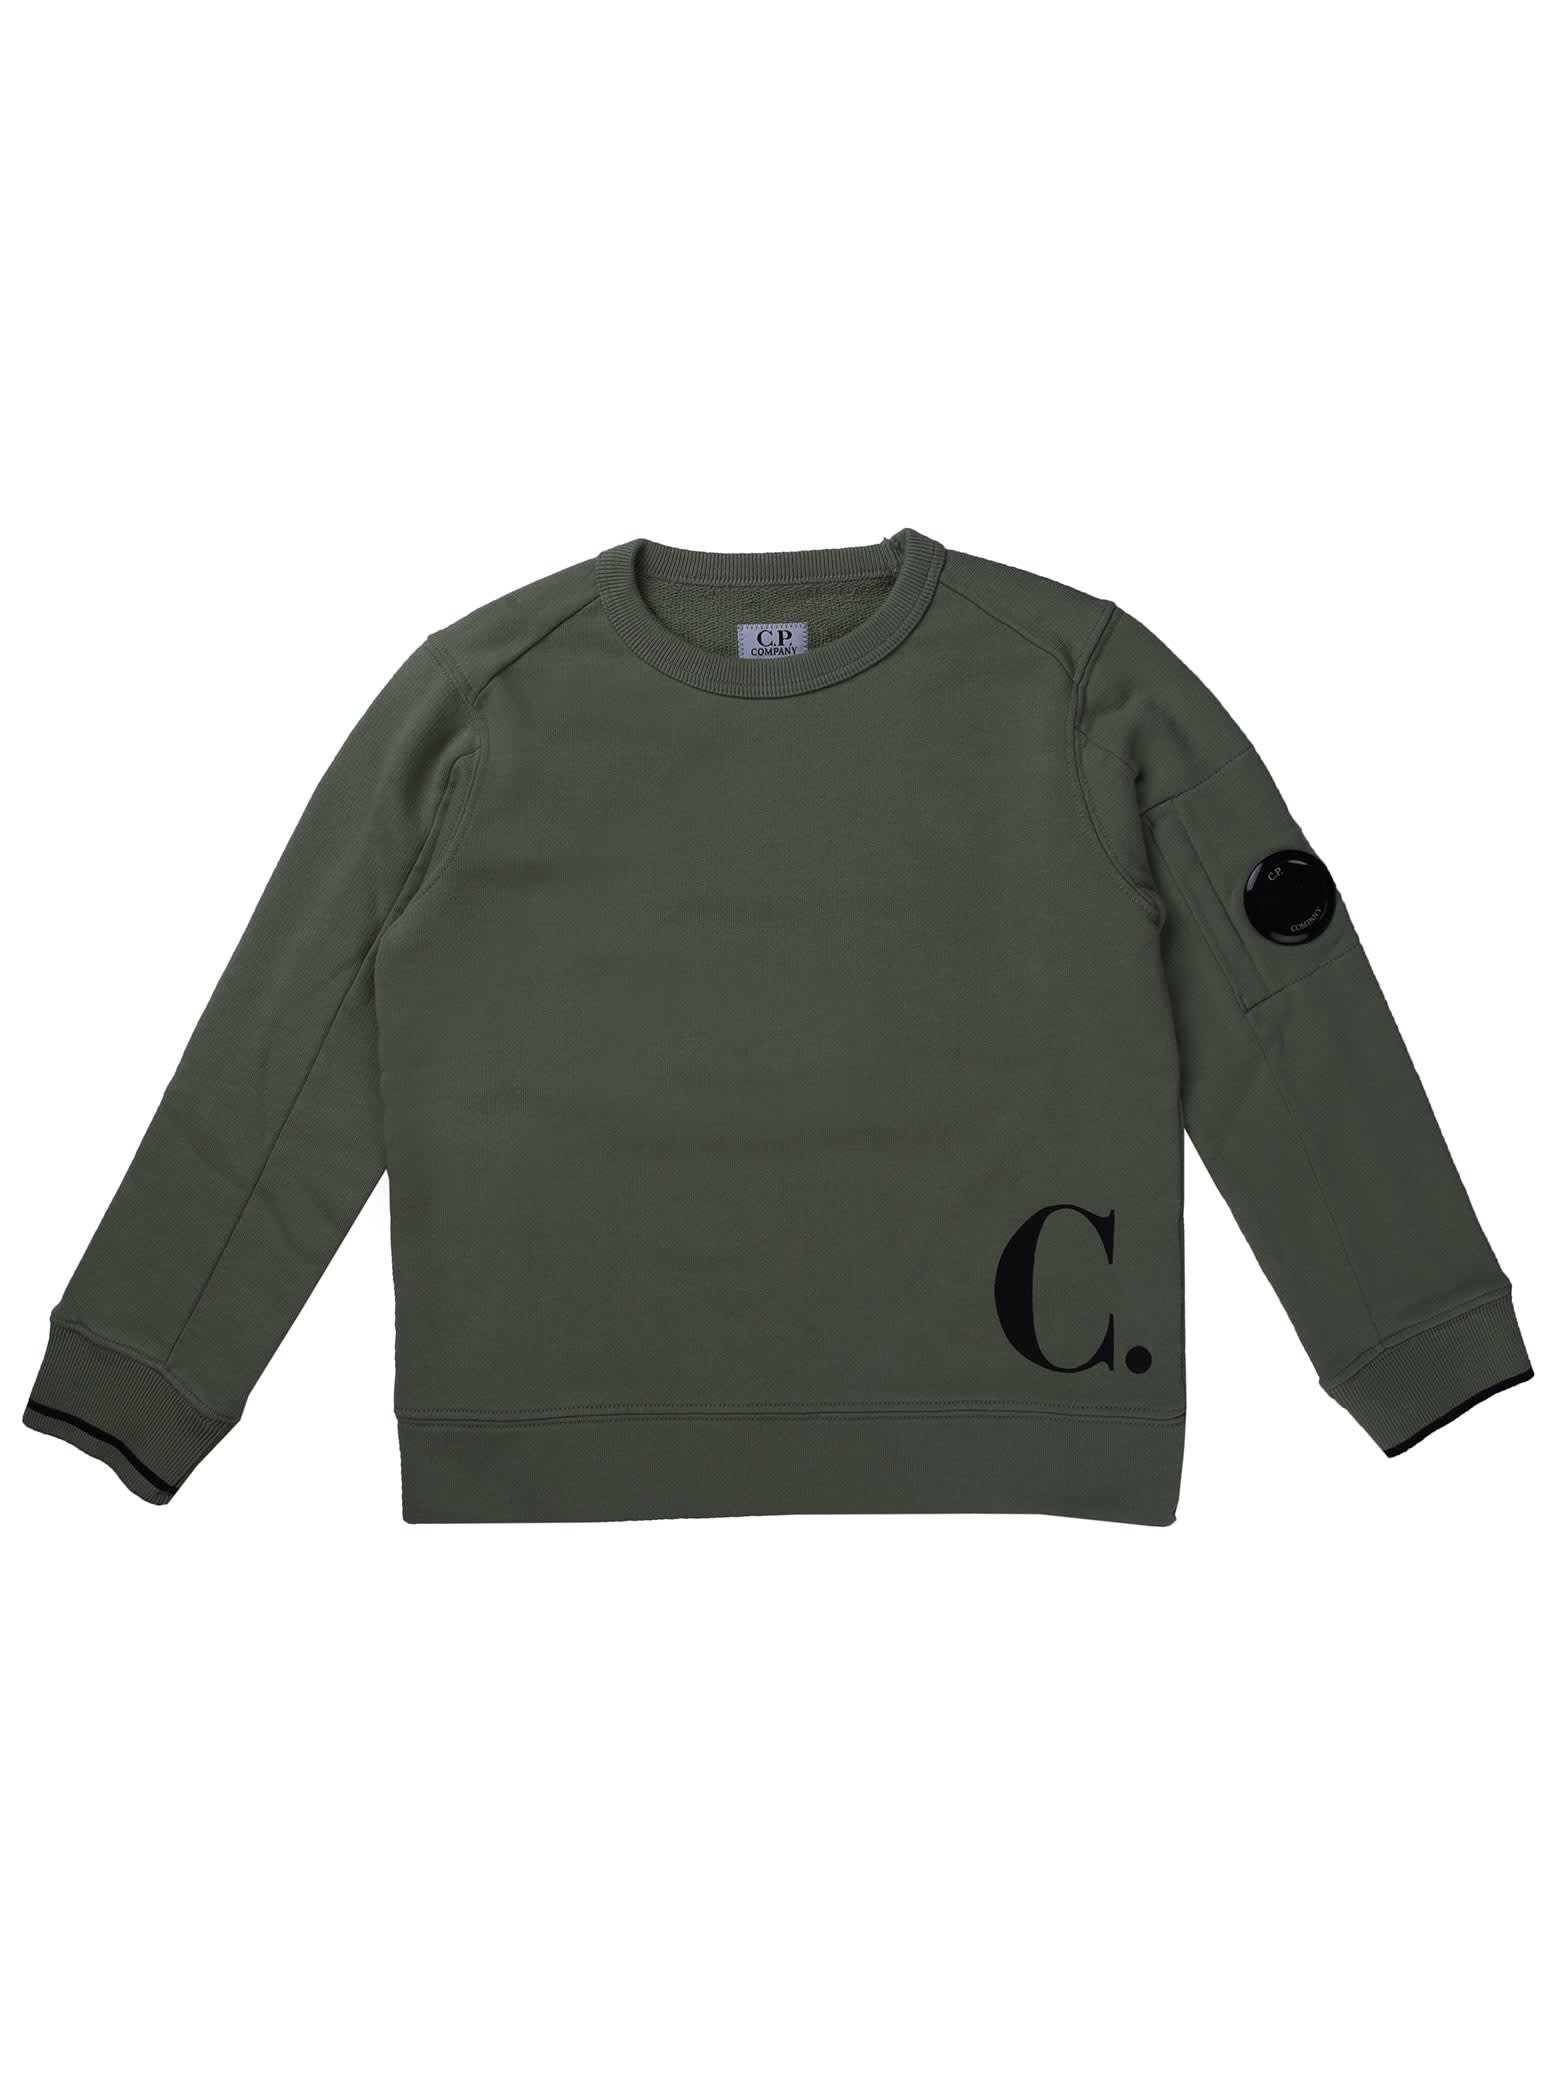 C.P. Company Sage Green Crew Neck Sweatshirt